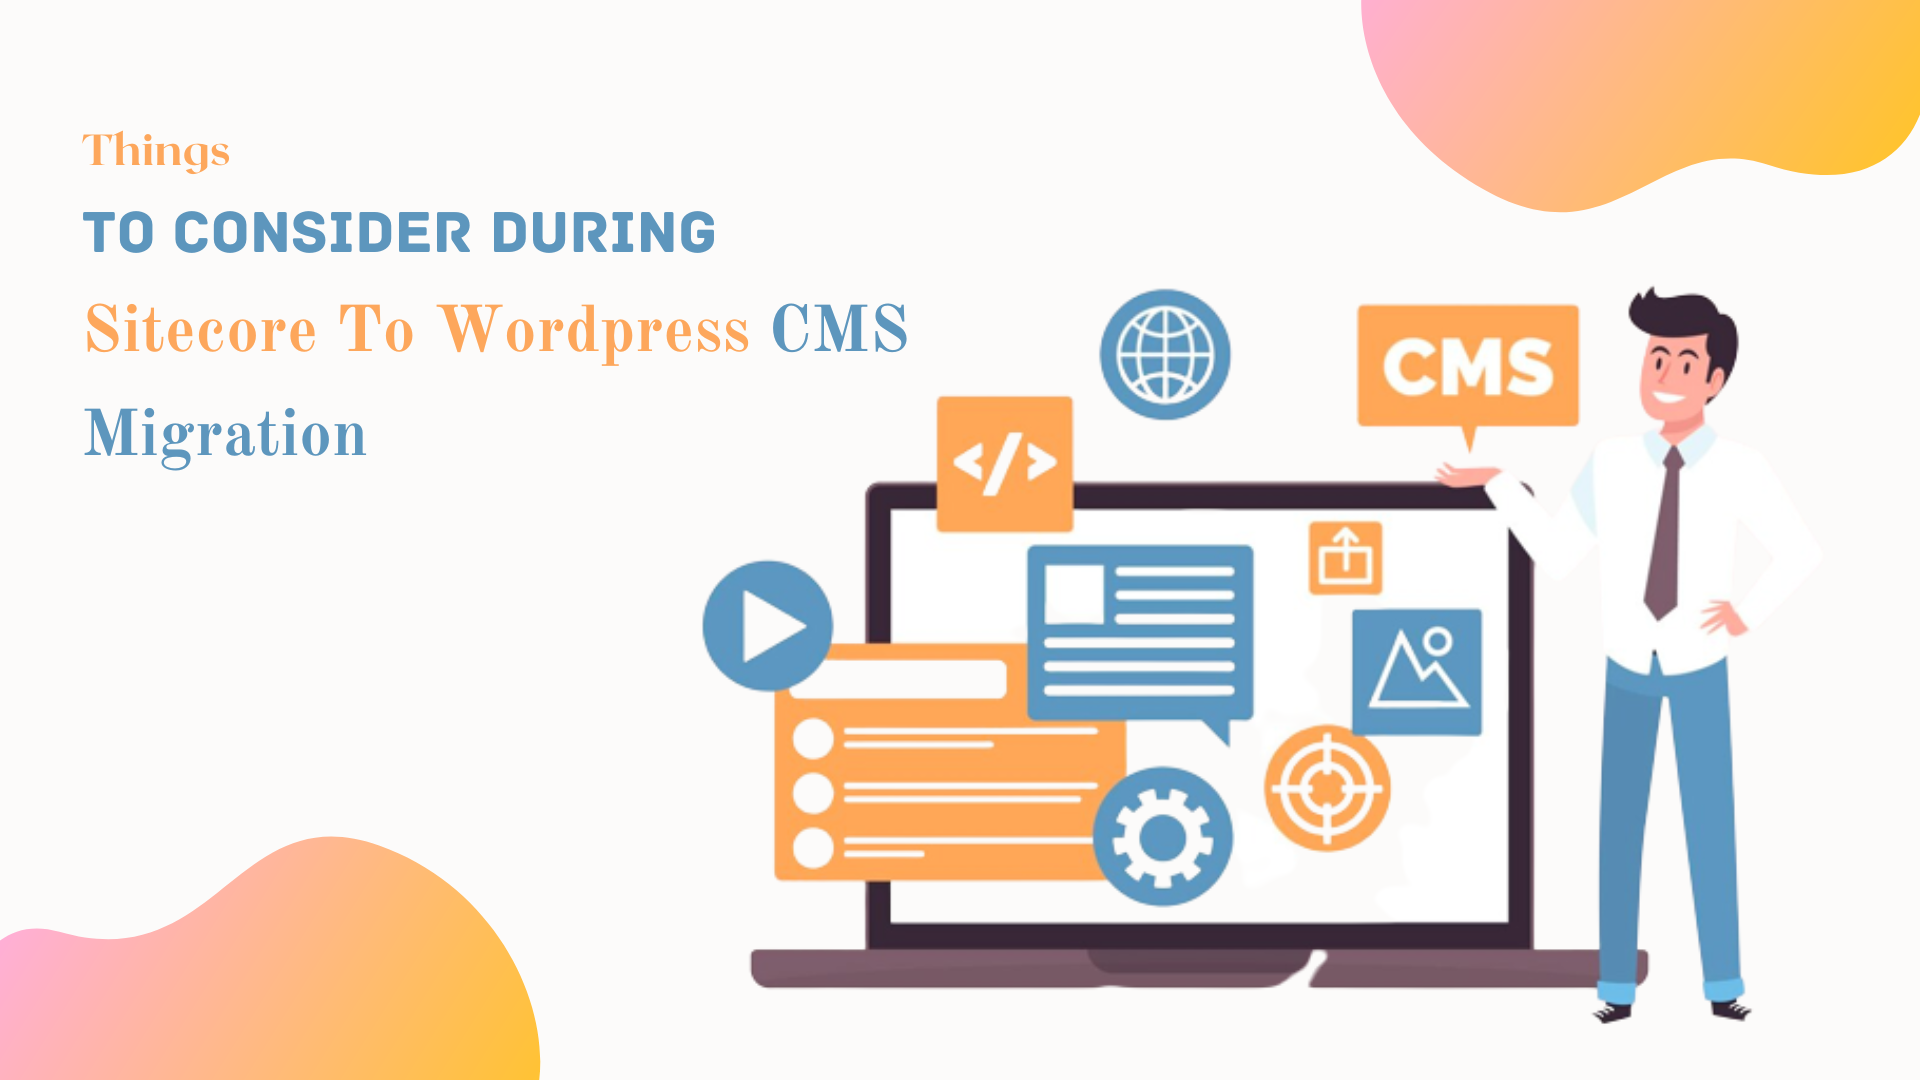 Sitecore To WordPress CMS Migration